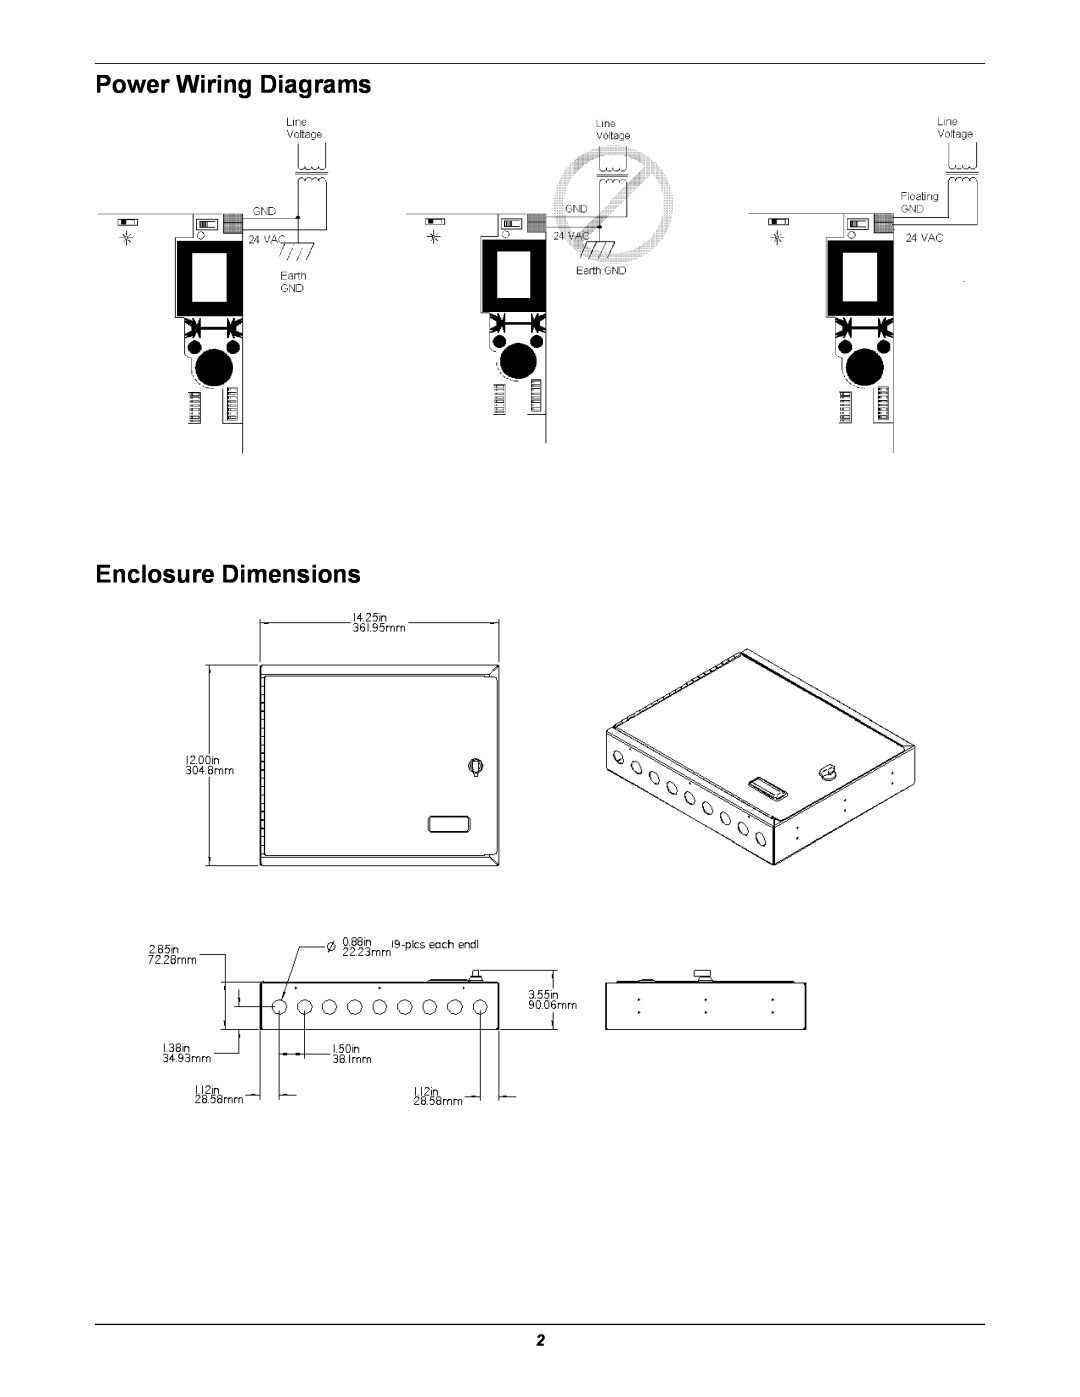 Emerson SITETPI-E V3 dimensions Power Wiring Diagrams Enclosure Dimensions 